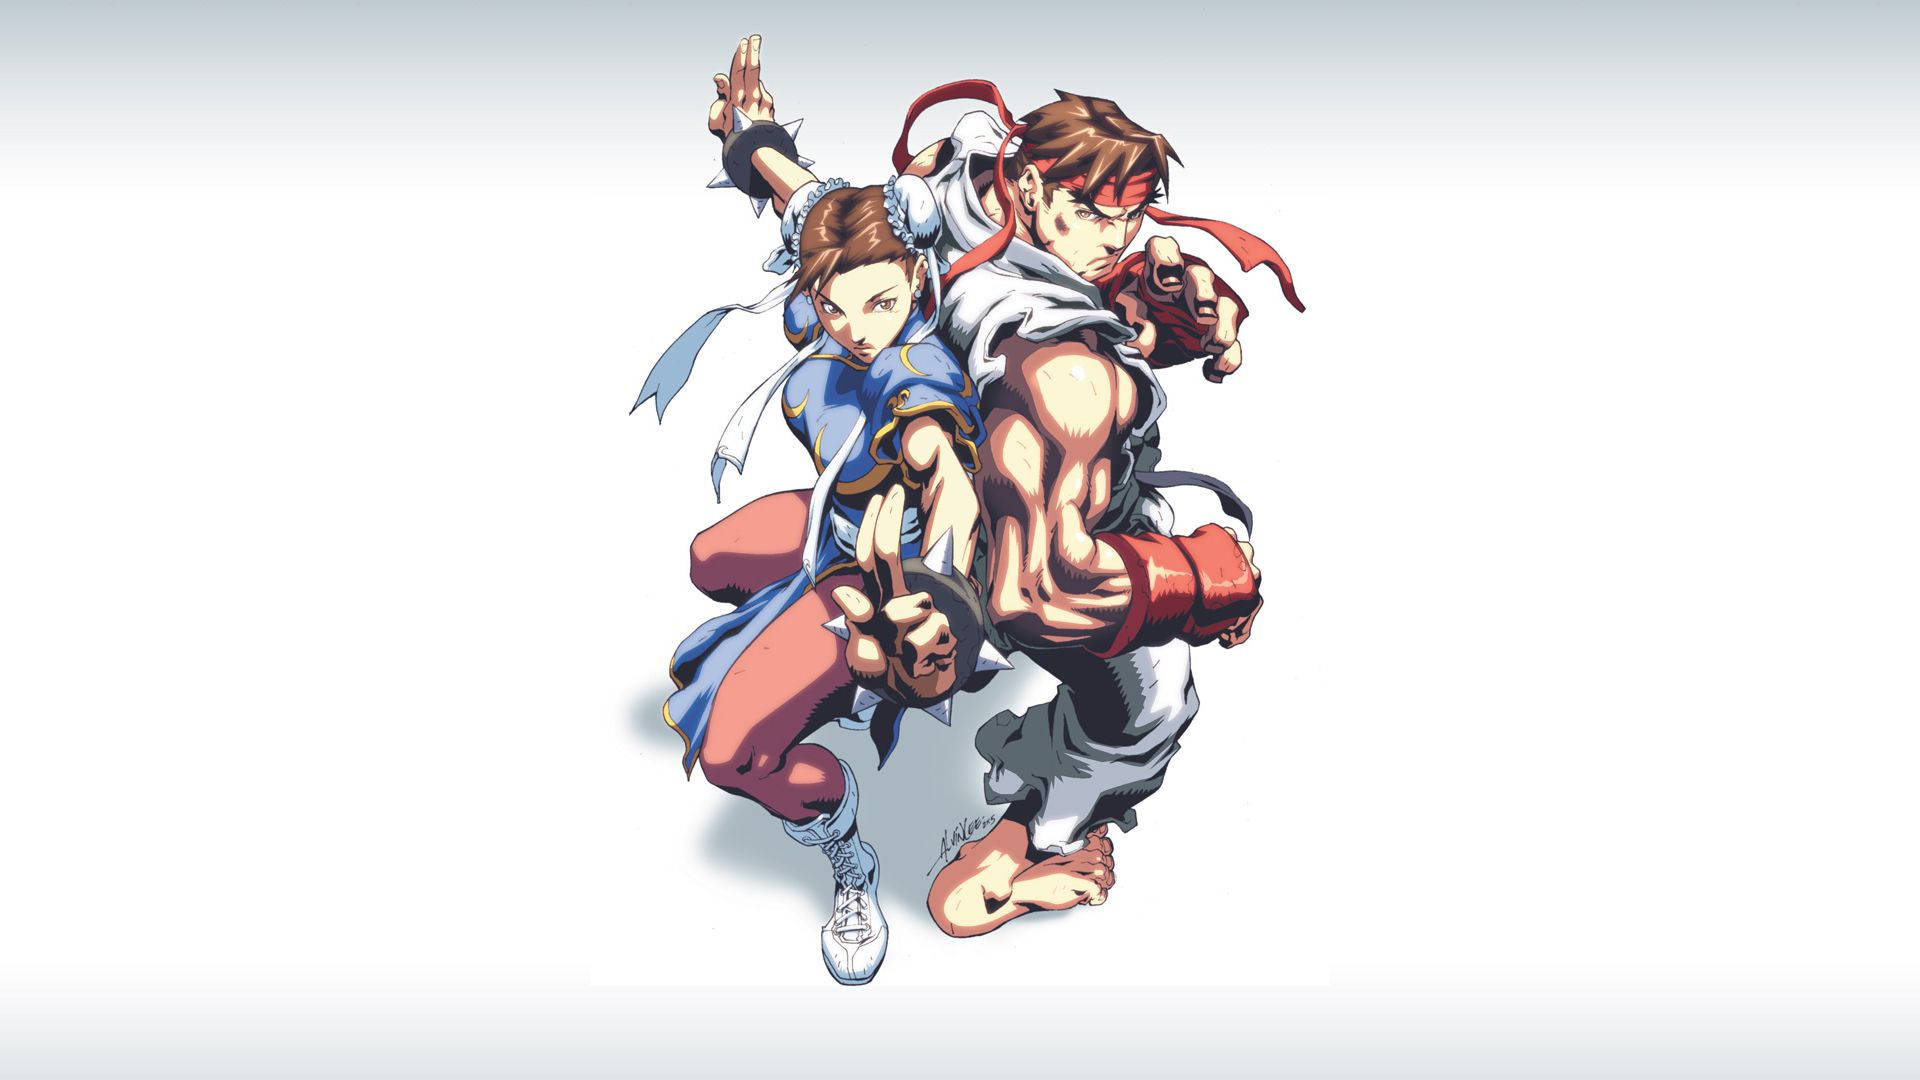 Chun-li And Ryu Ultra Street Fighter Background